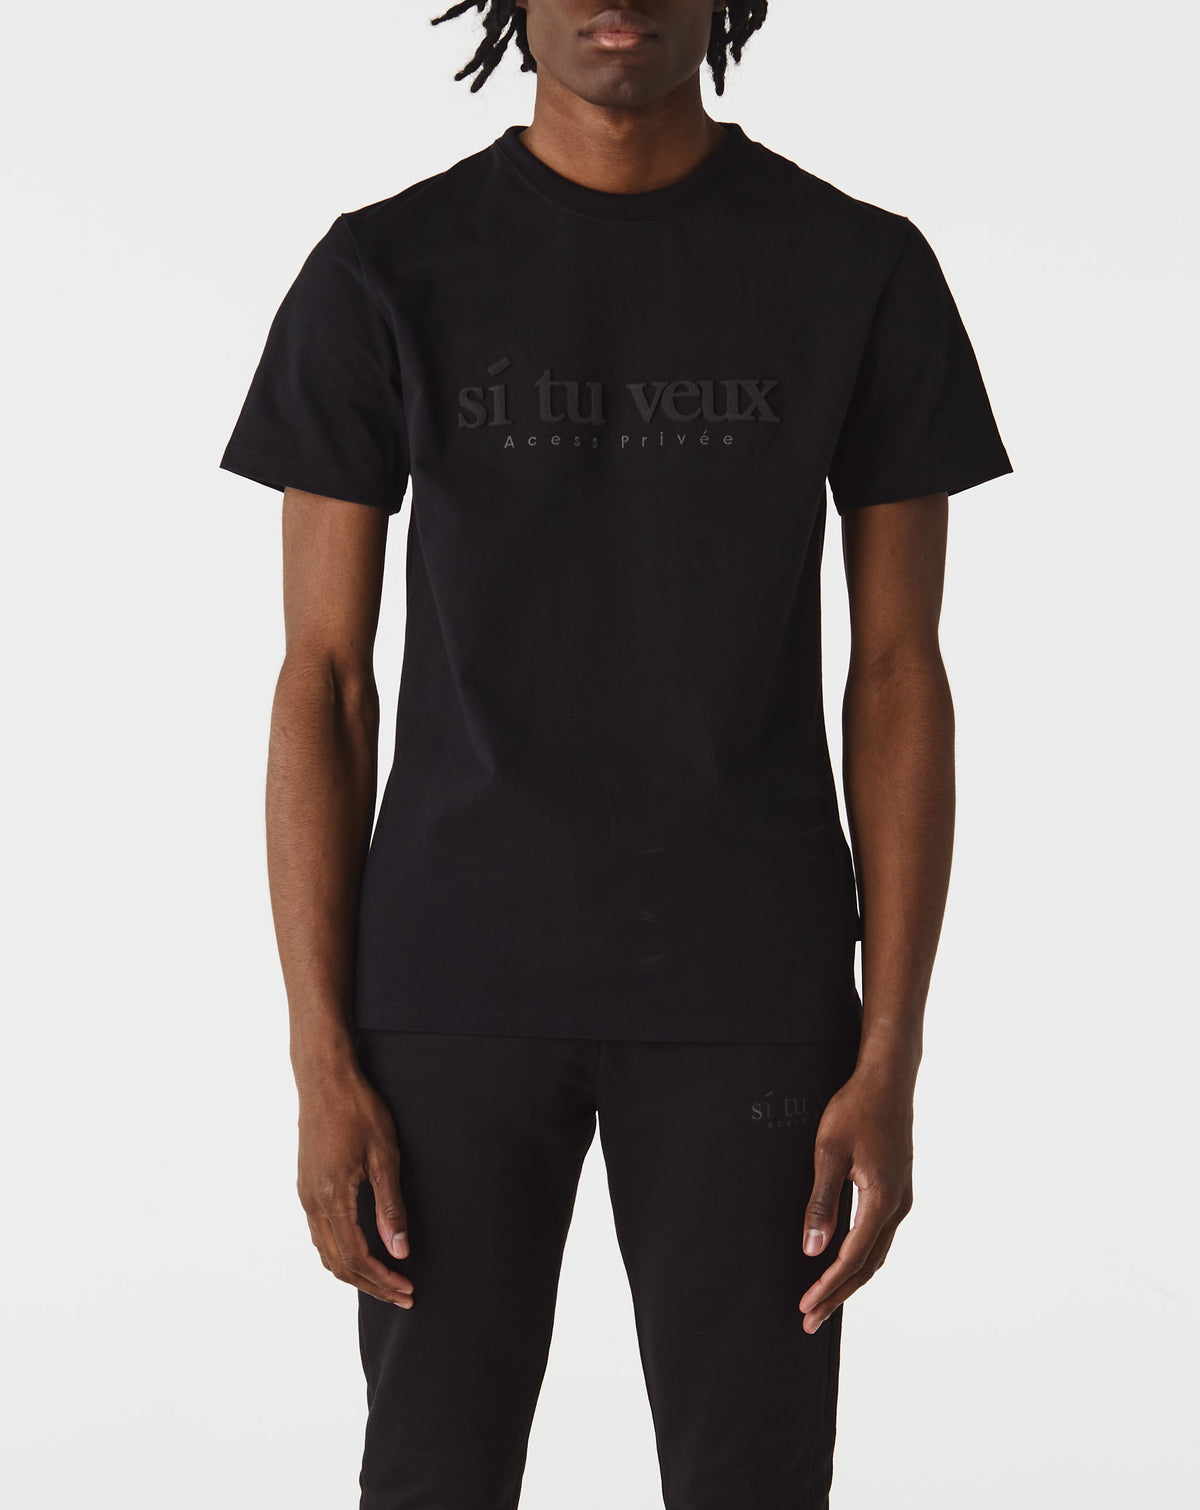 Si Tu Veux Denim Veux T-Shirt - Rule of Next Apparel